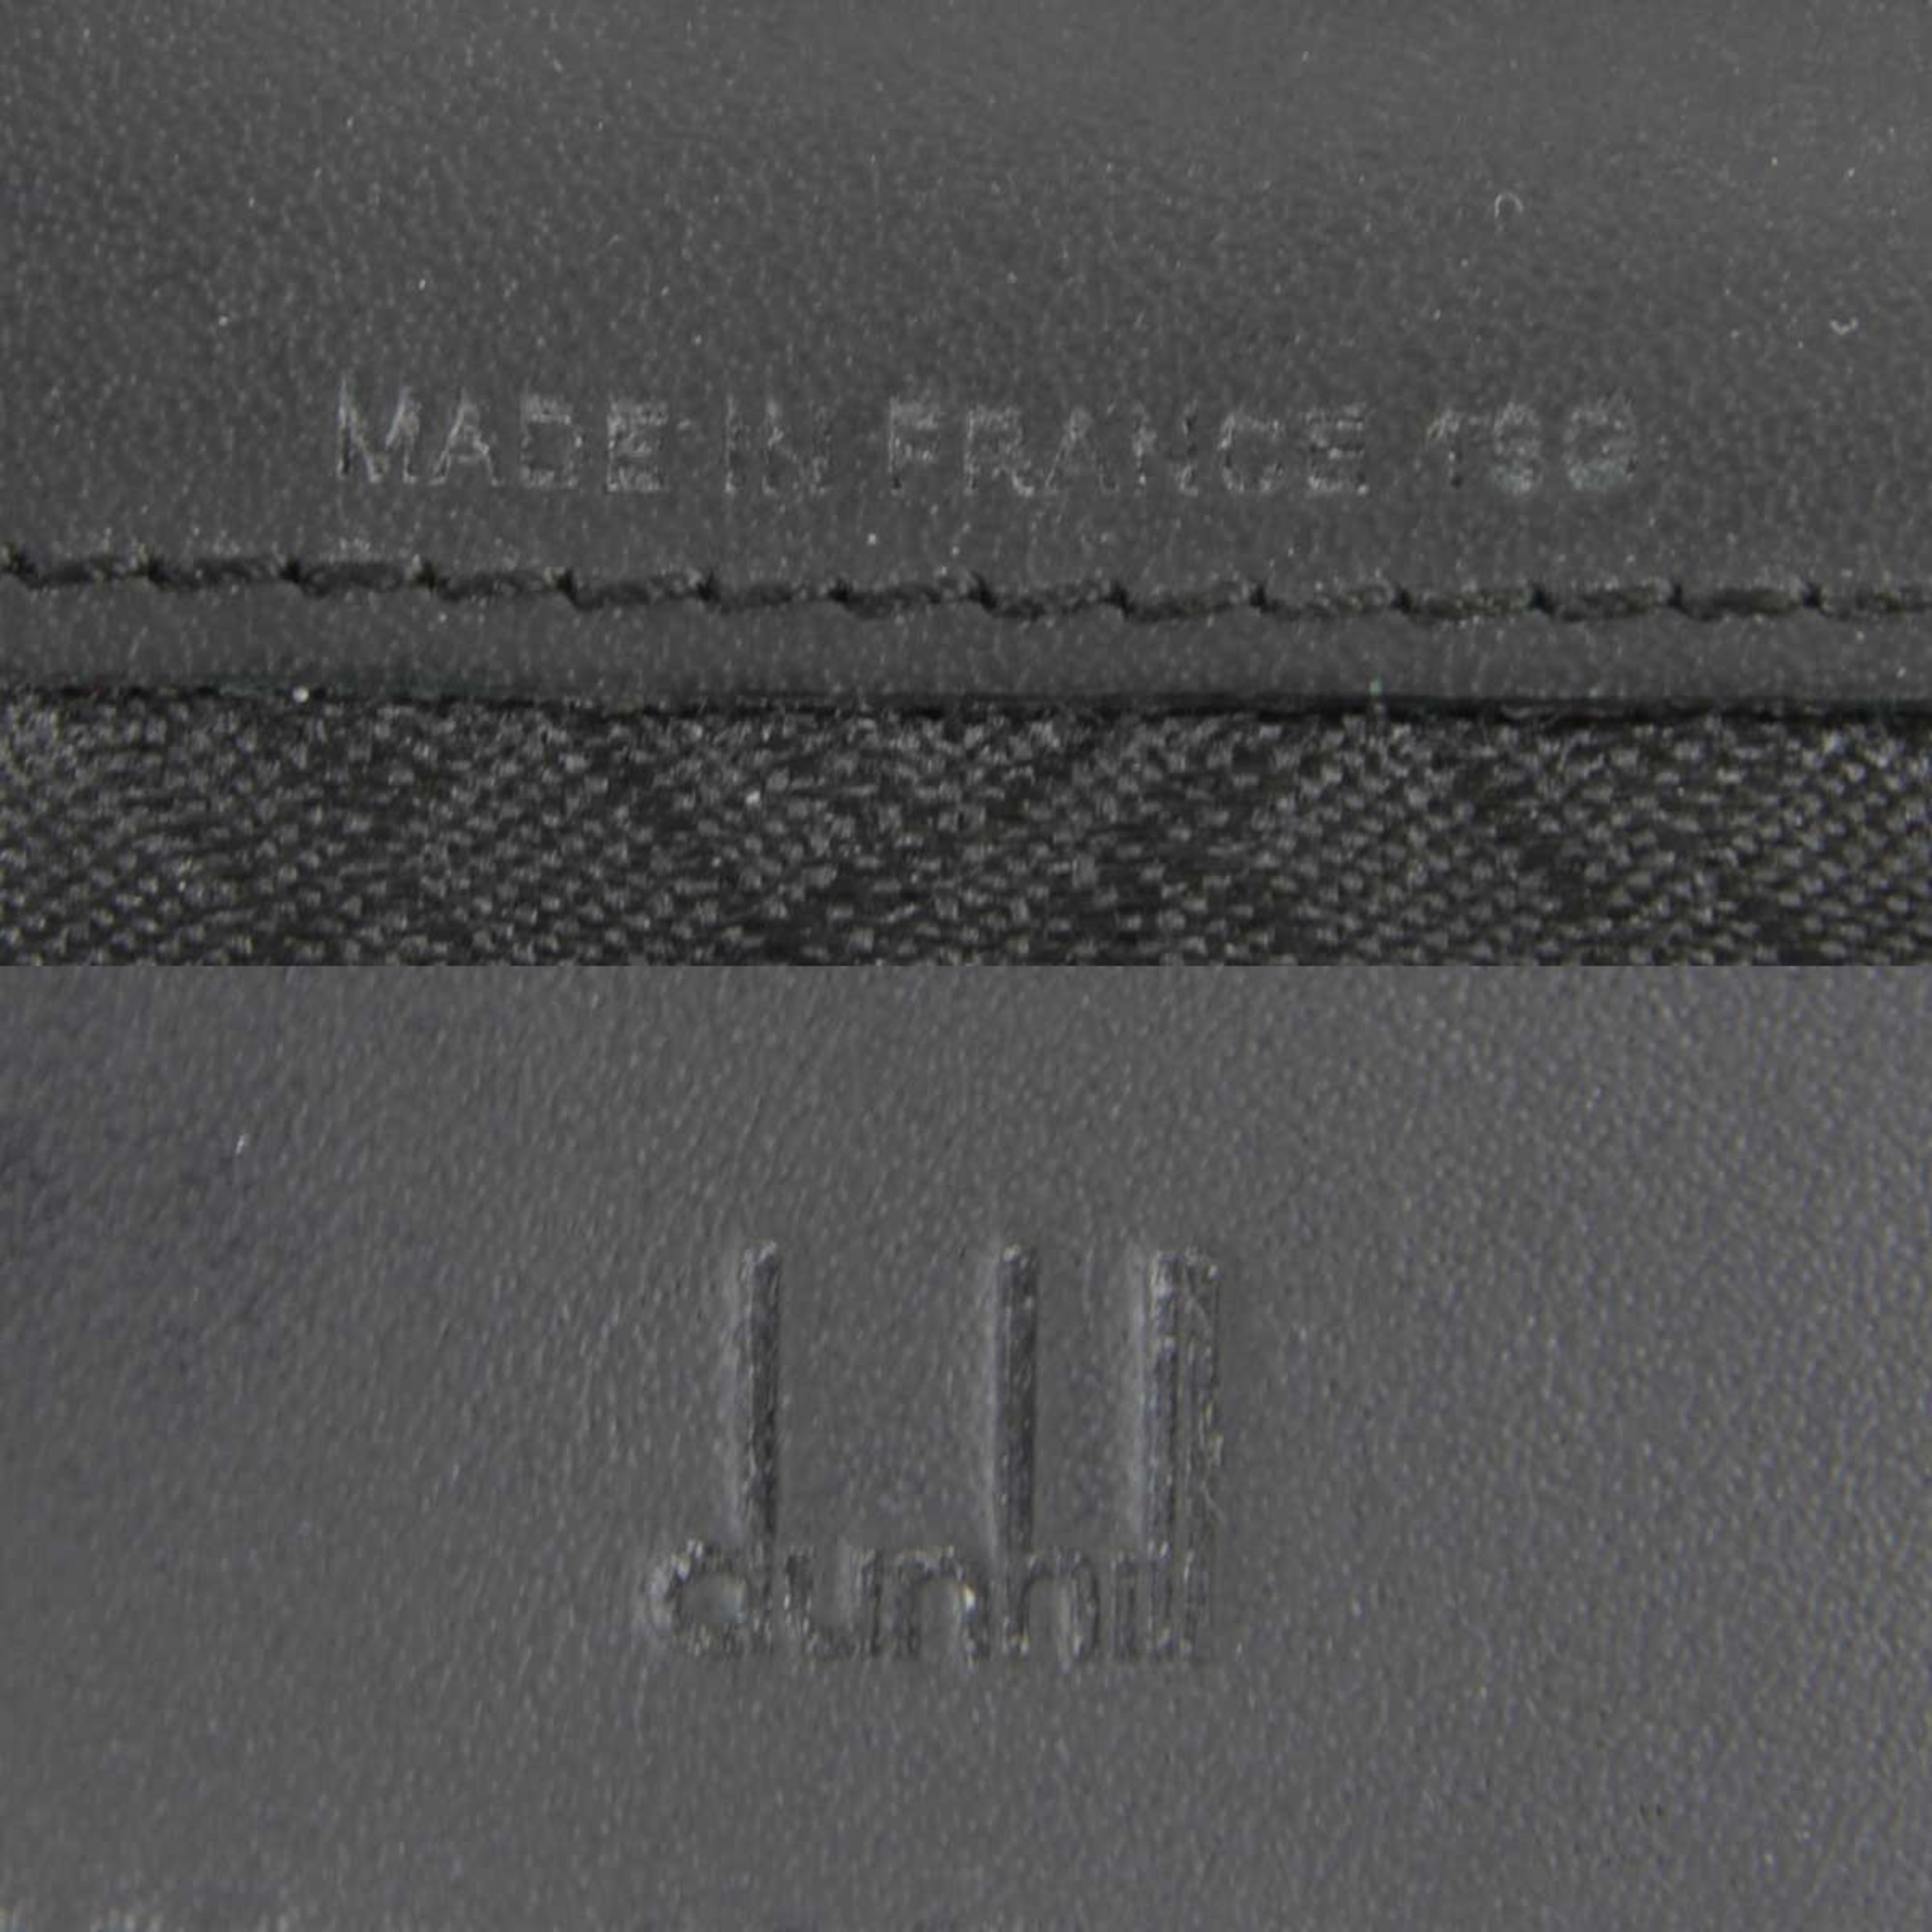 Dunhill Card Case Leather Black Men's